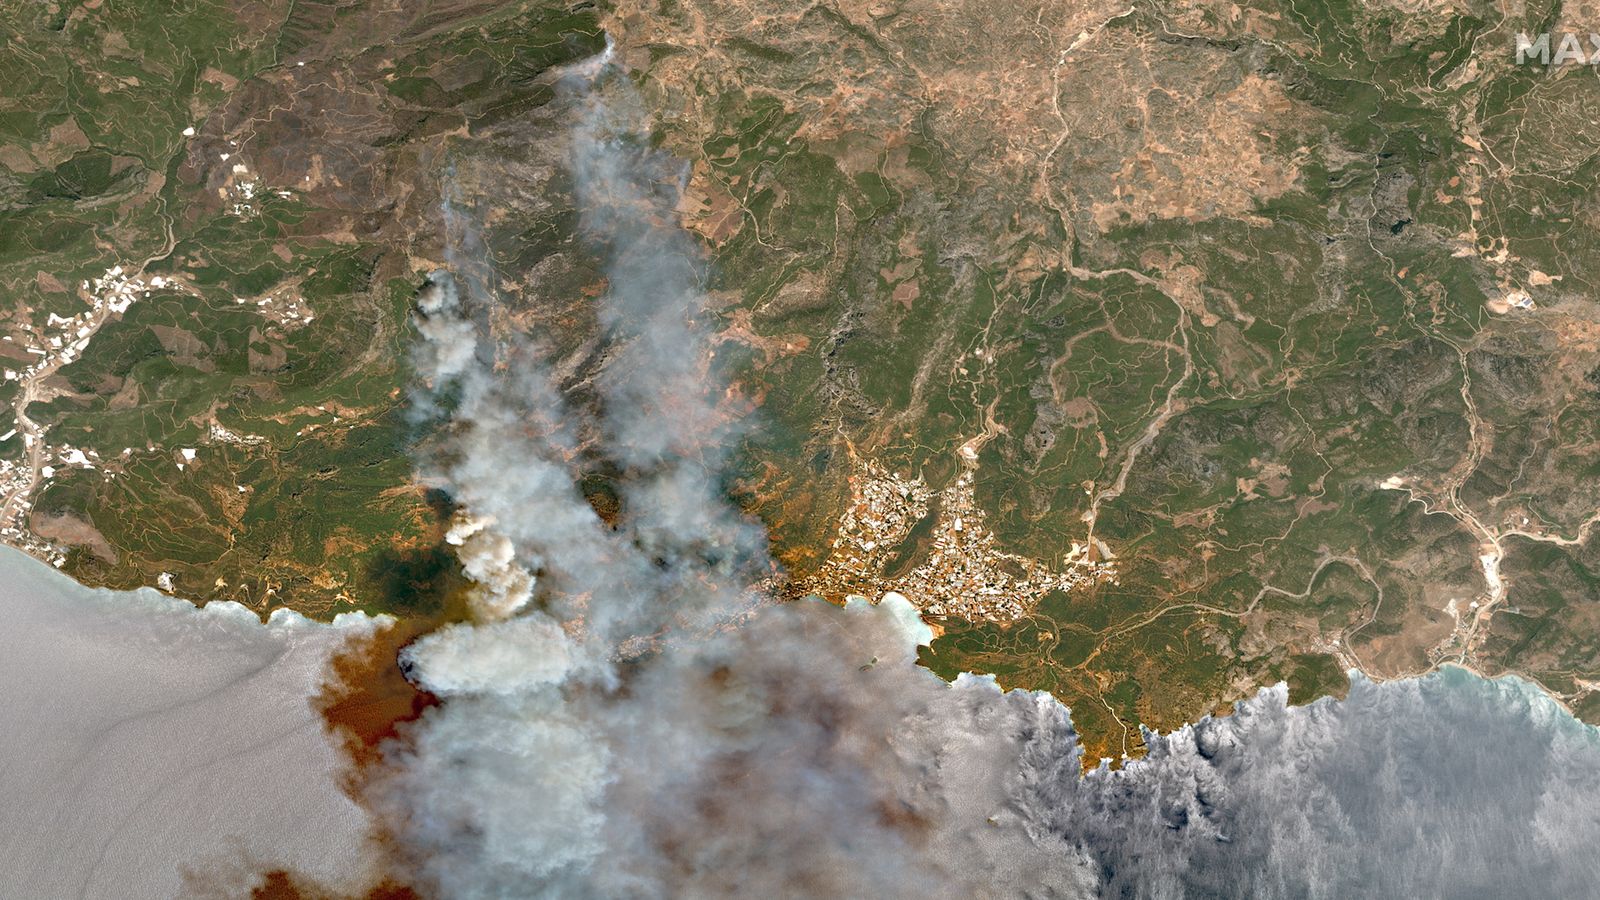 Cincunri Sakia Turkey wildfires Satellite images show devastation